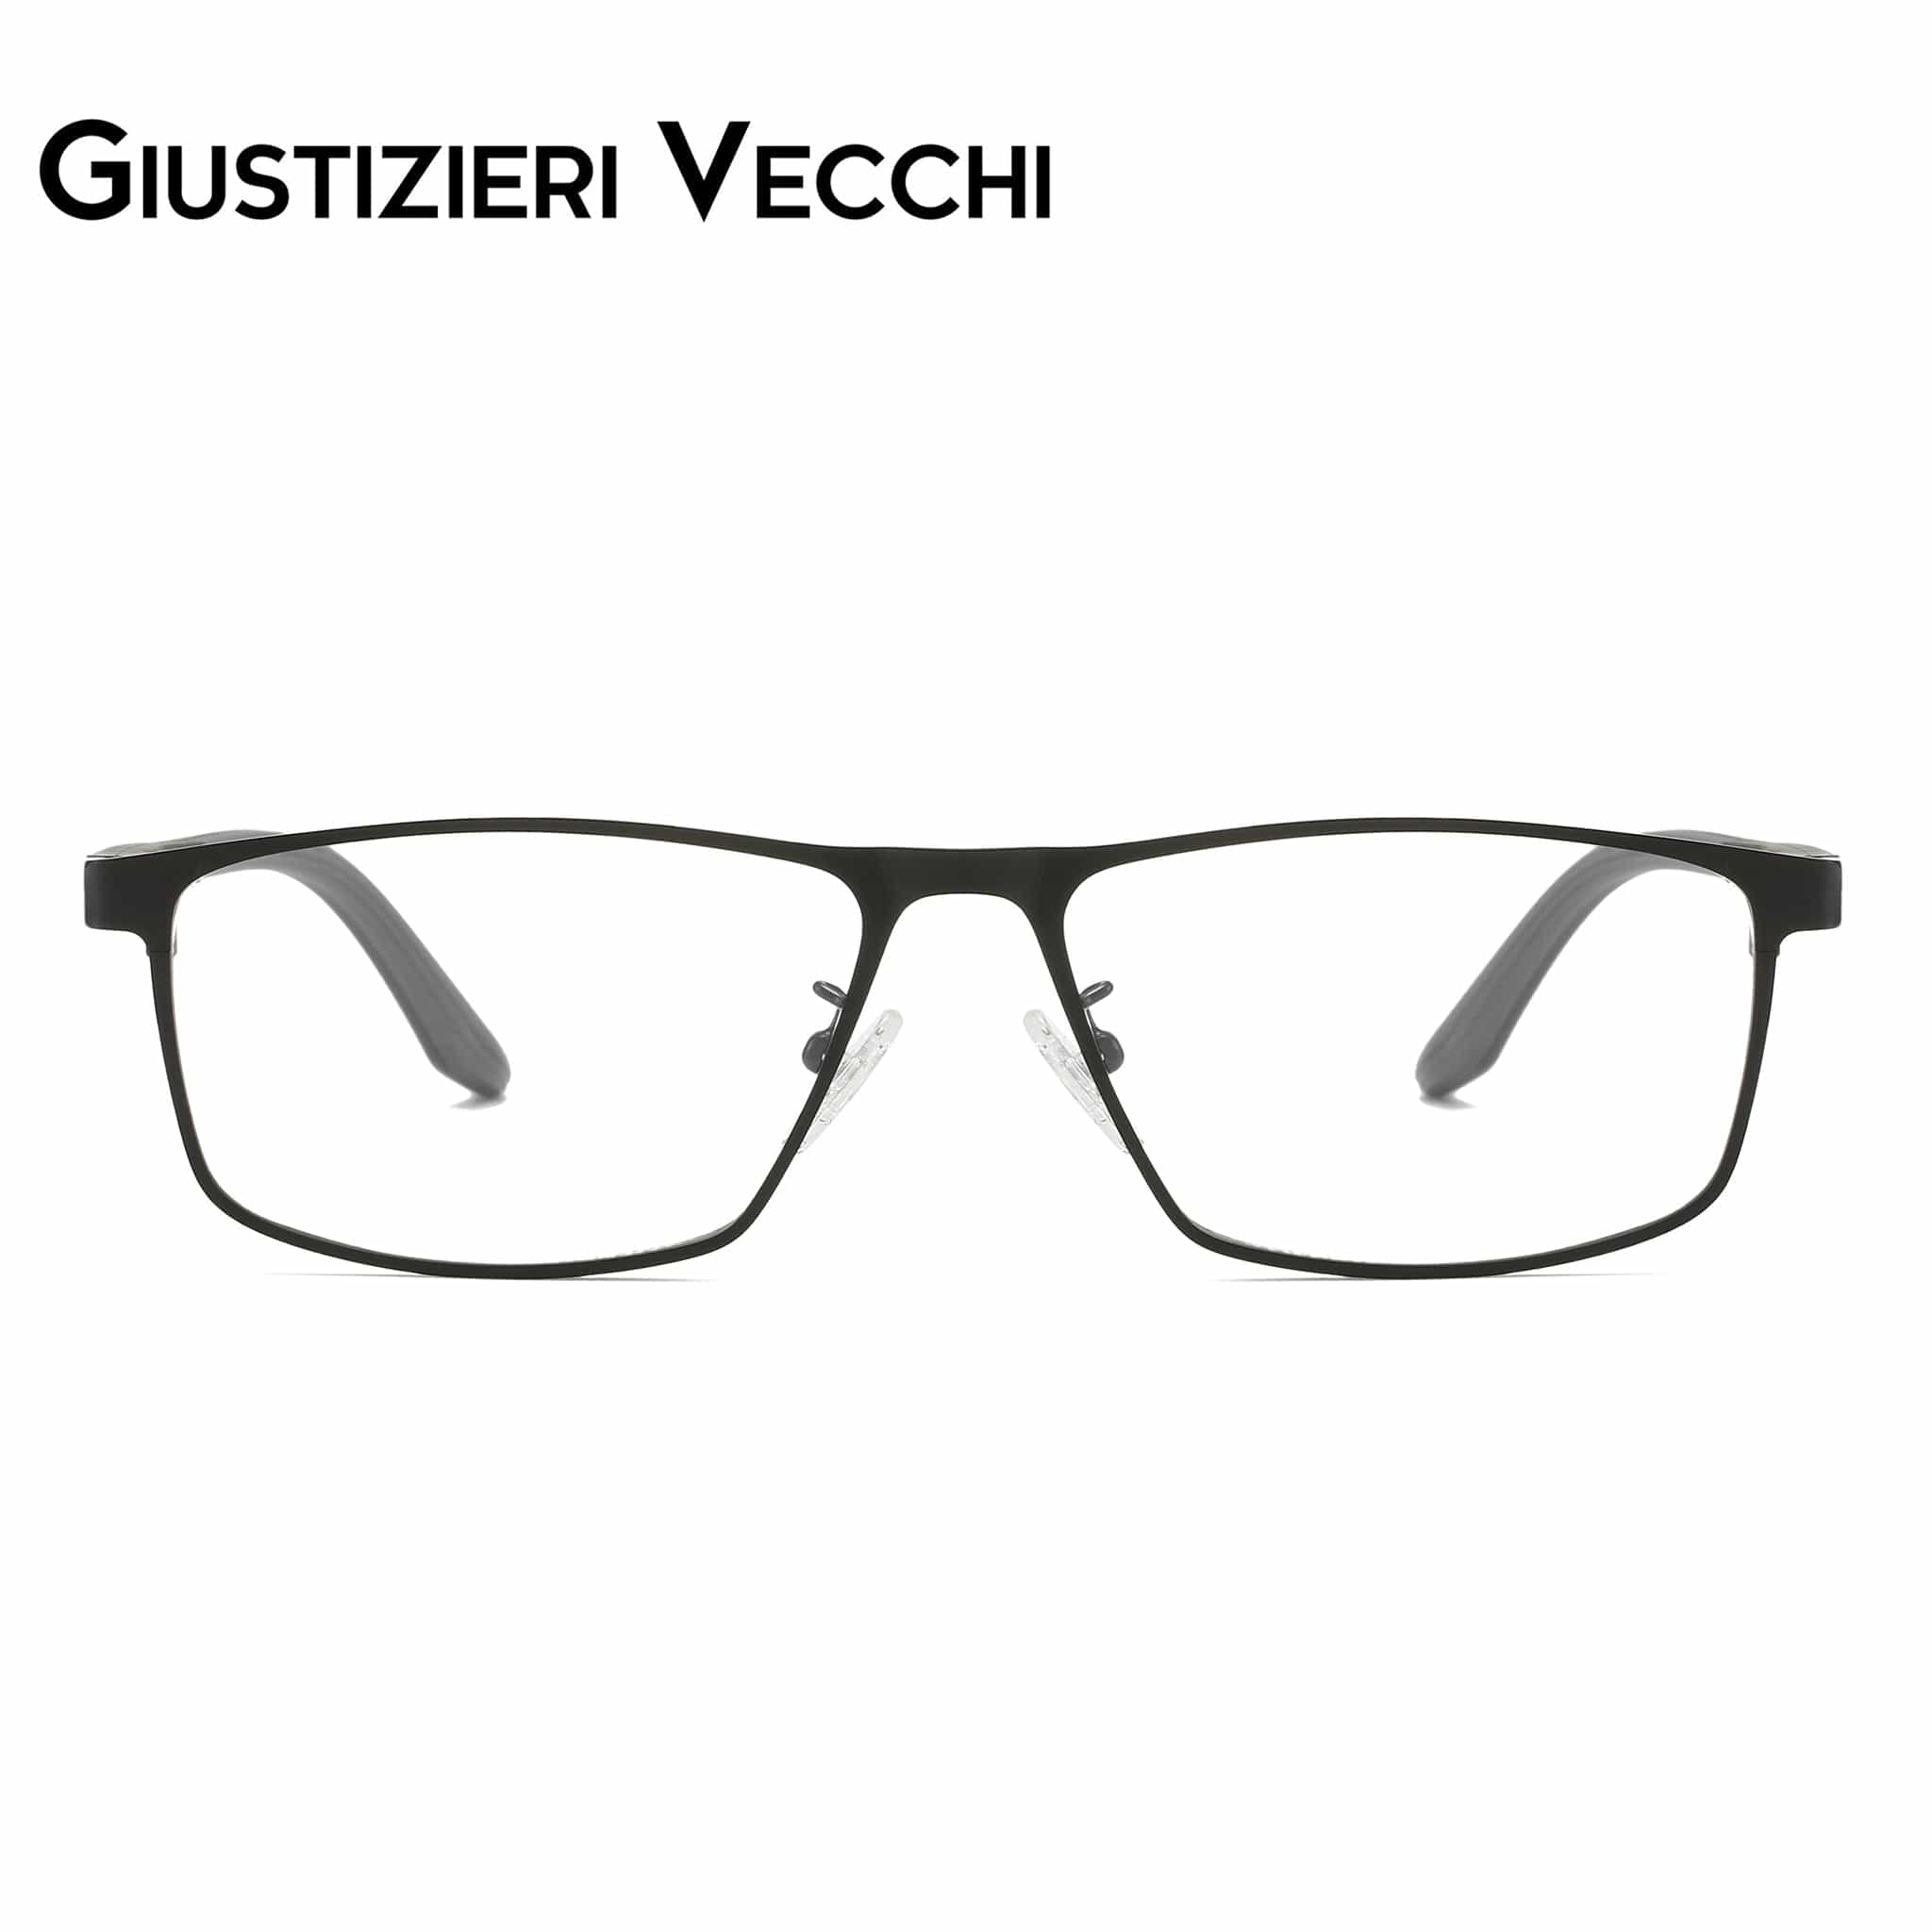 GIUSTIZIERI VECCHI Eyeglasses Large / Black with Grey IceStorm Uno